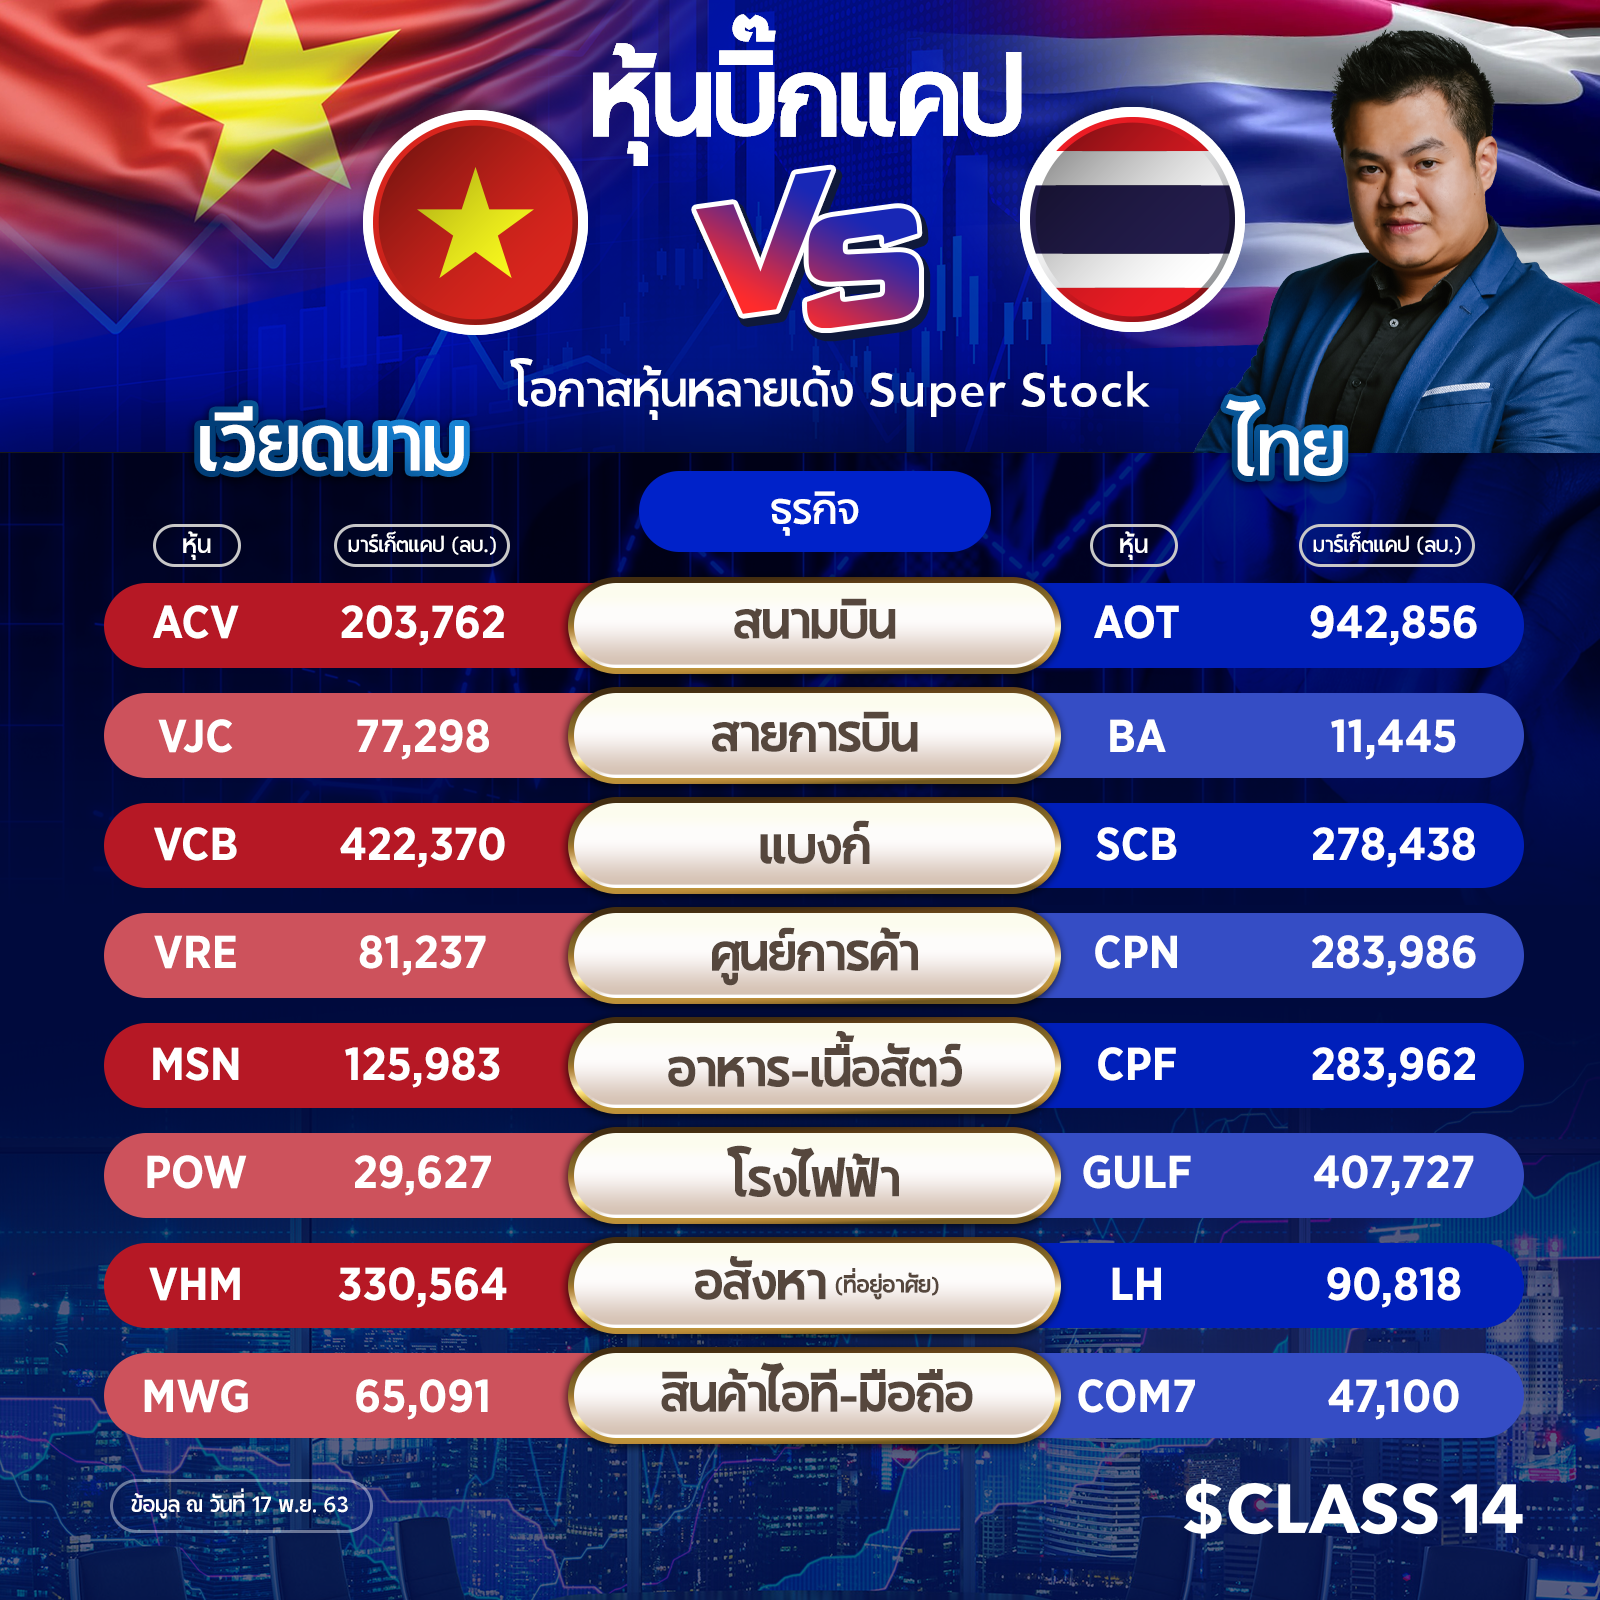 thailand VS vietnam